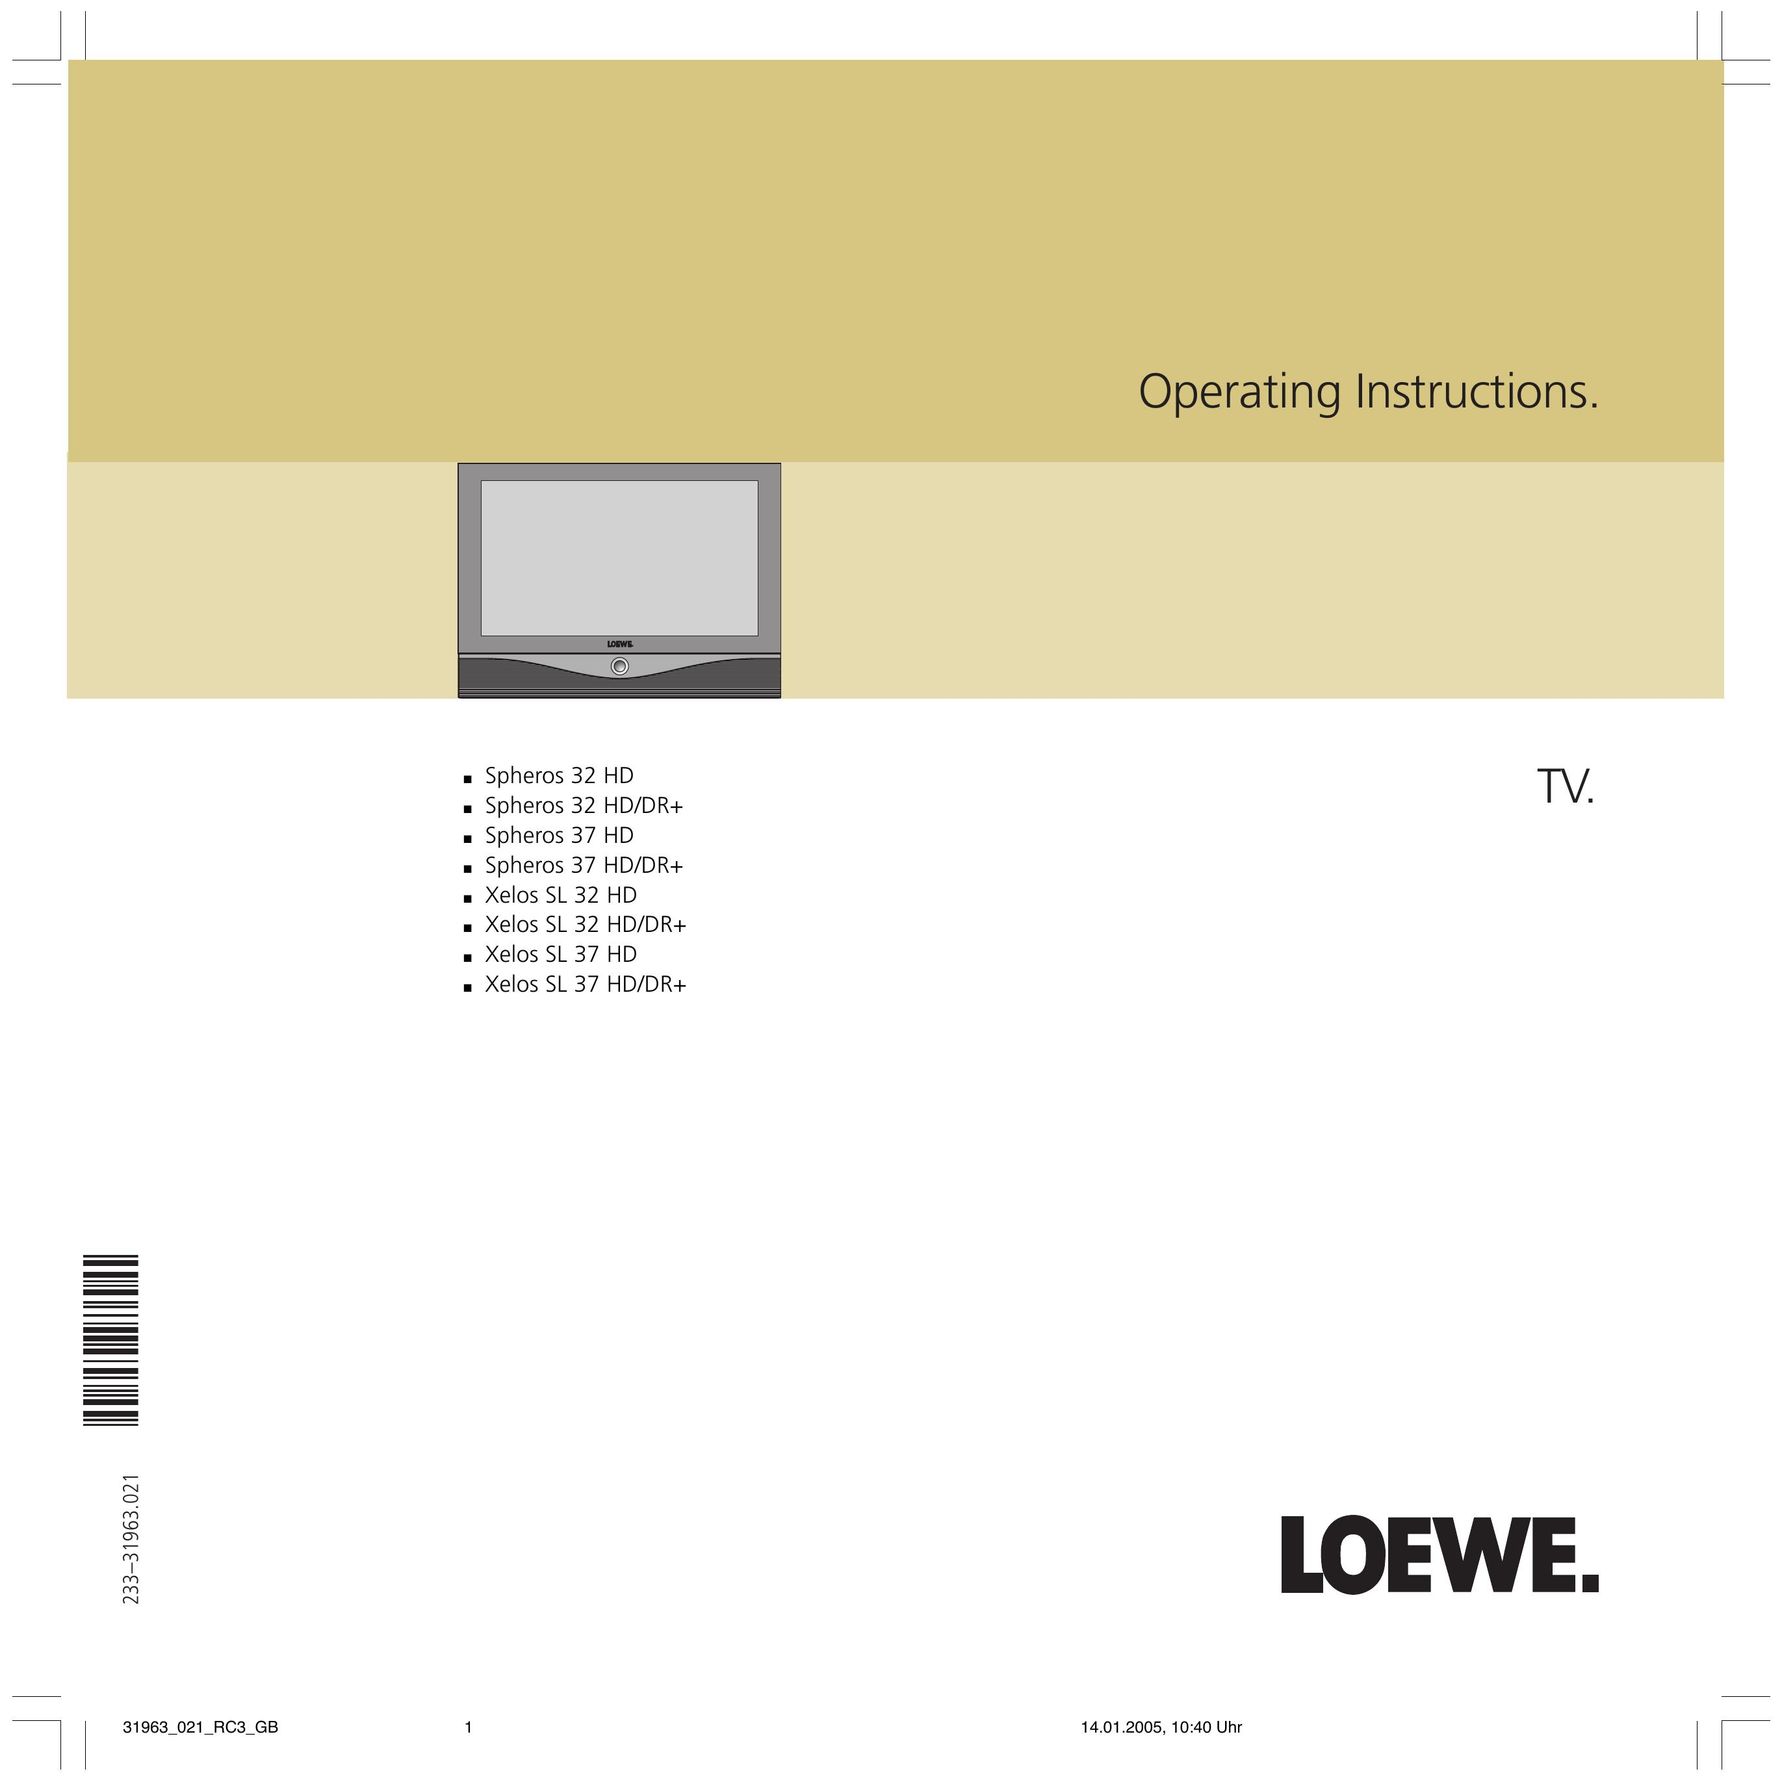 Loewe 37 HD Flat Panel Television User Manual